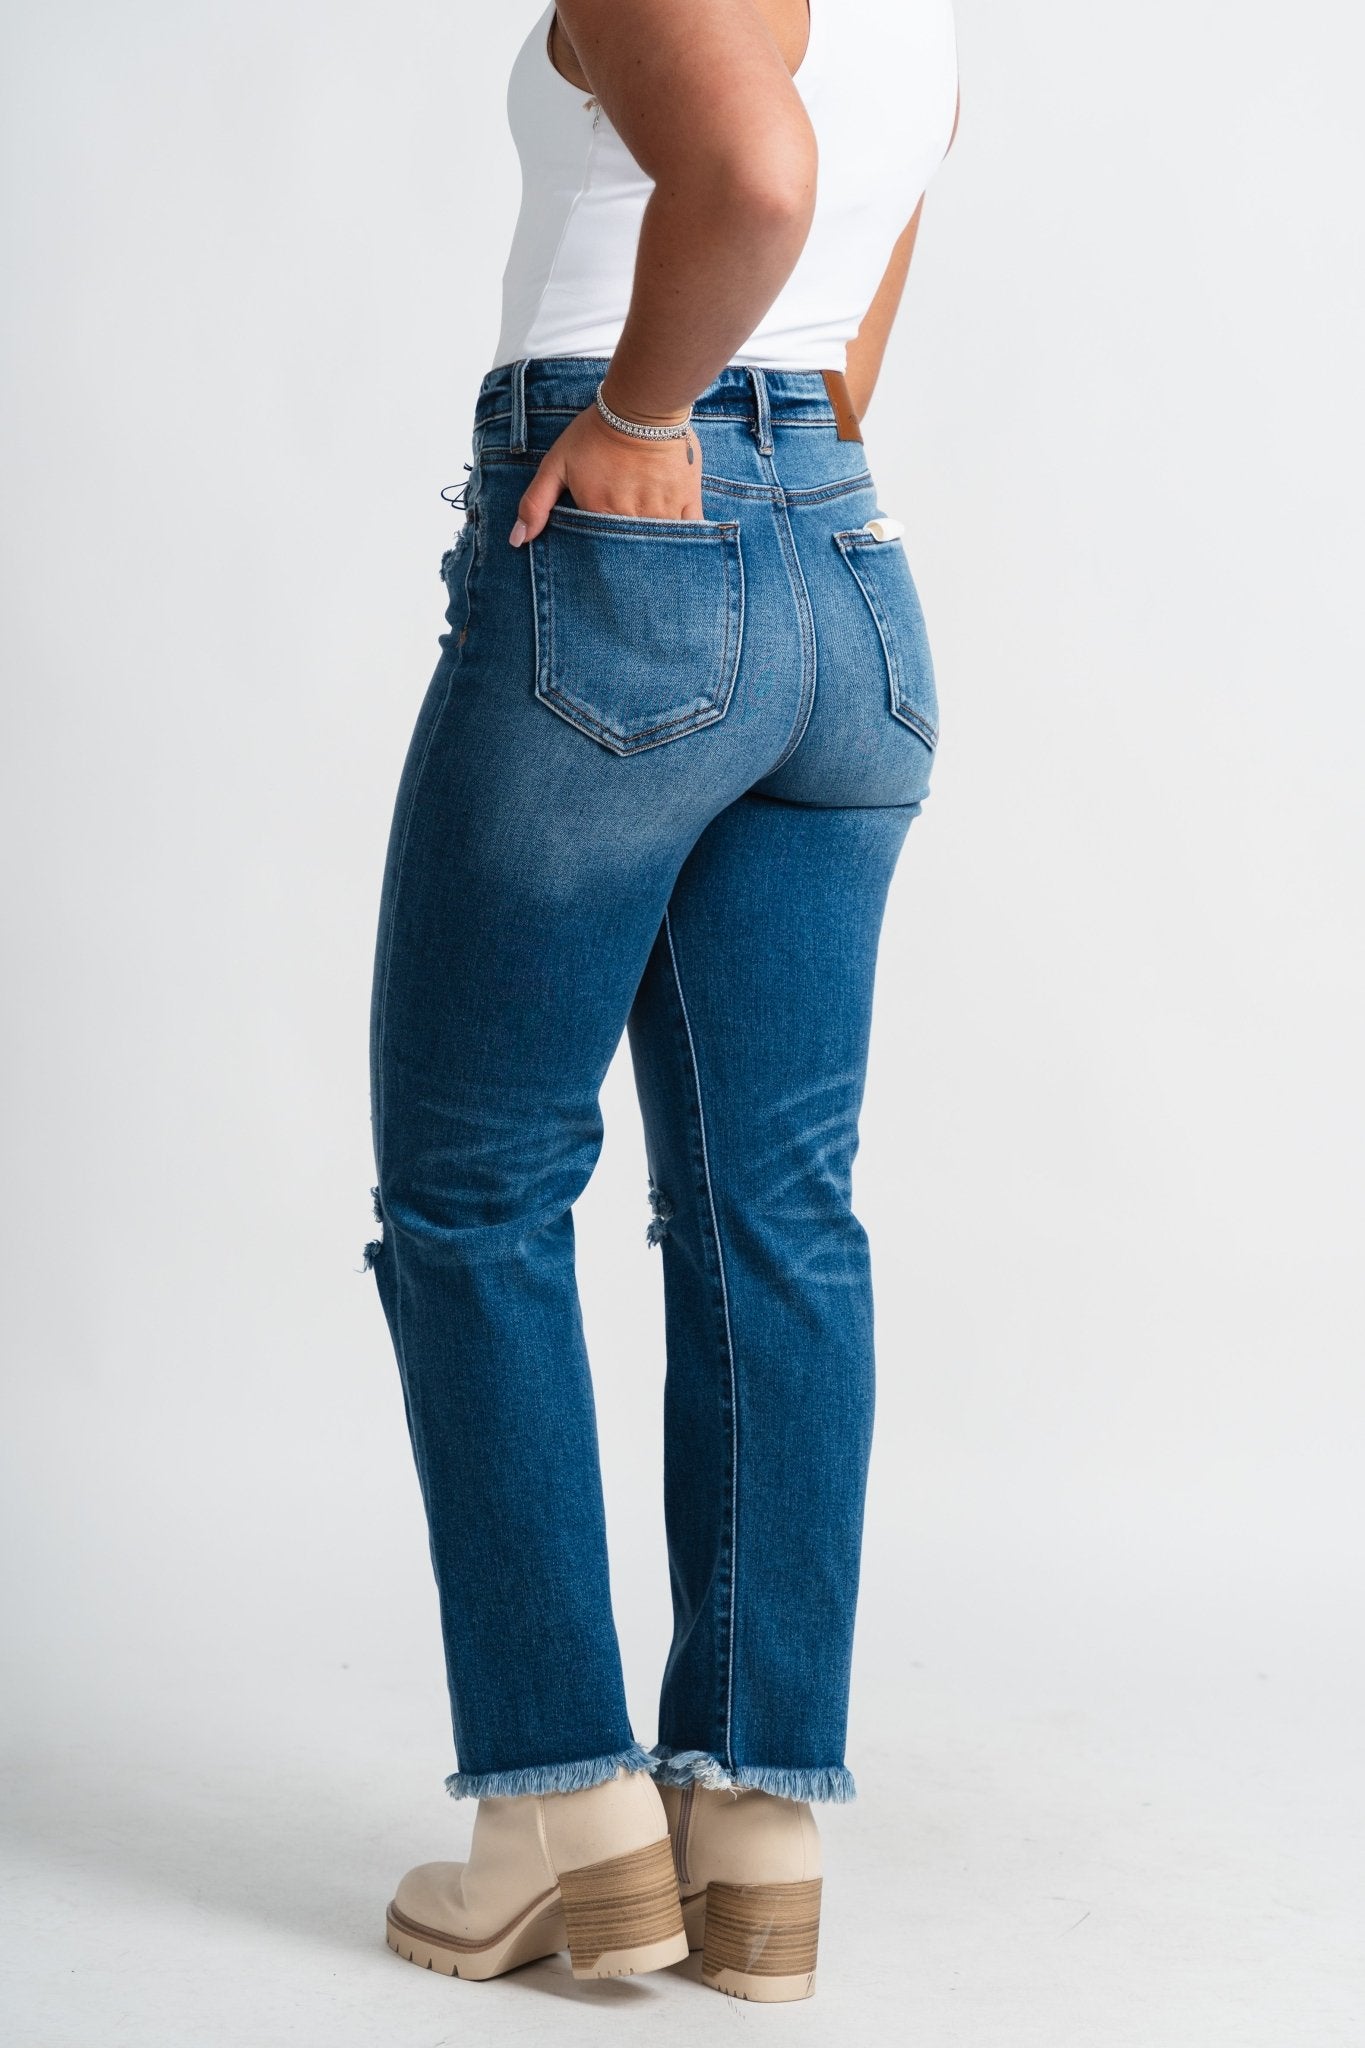 Hidden Tracey high rise straight jeans dark blue | Lush Fashion Lounge: boutique women's jeans, fashion jeans for women, affordable fashion jeans, cute boutique jeans